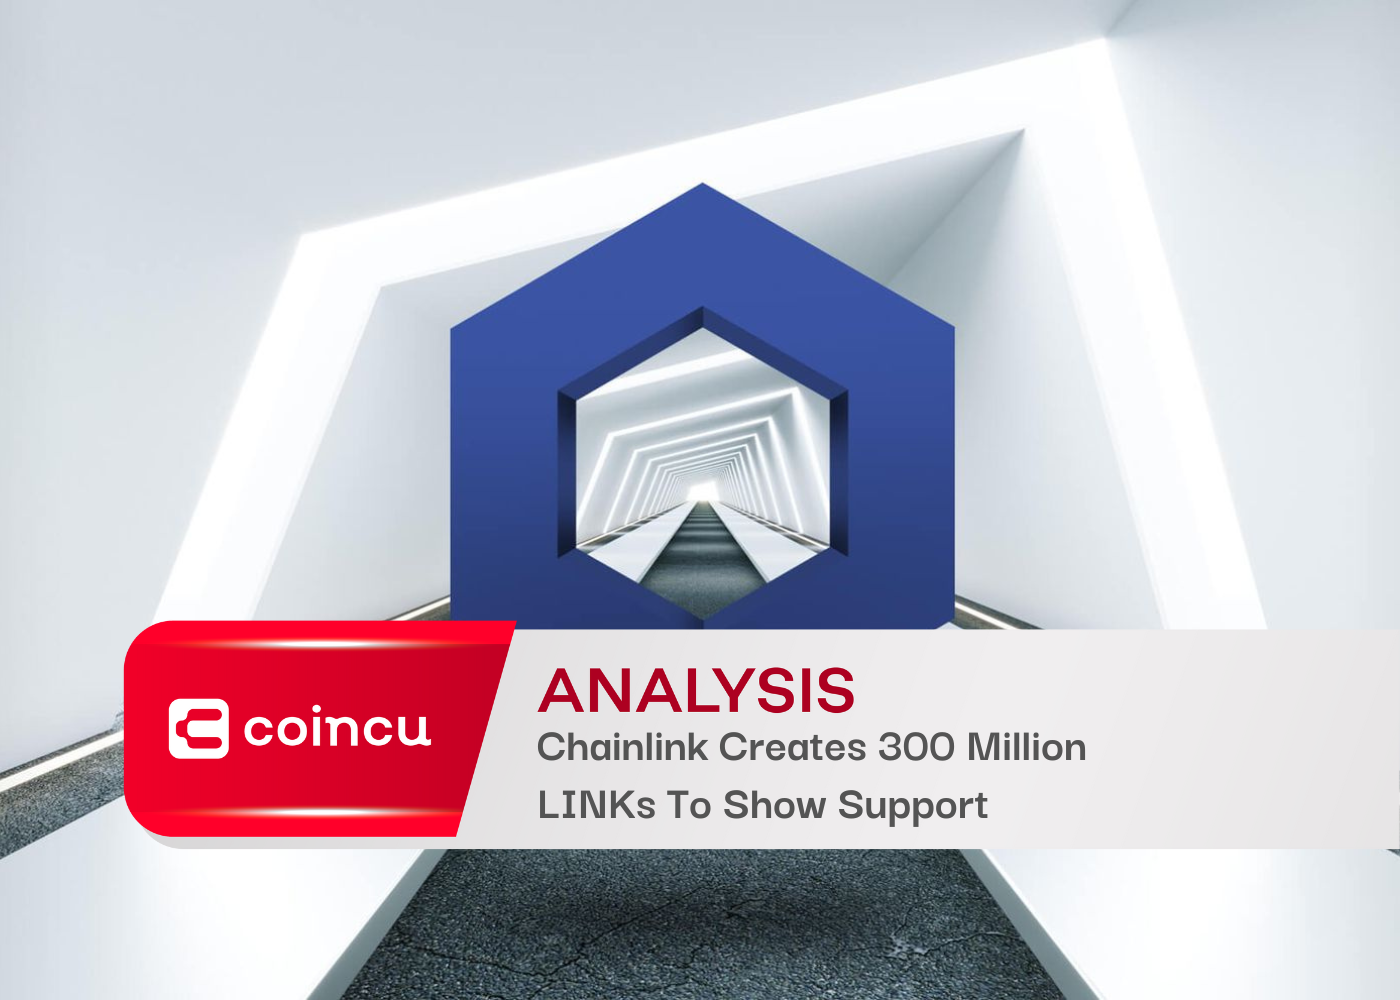 Chainlink Creates 300 Million